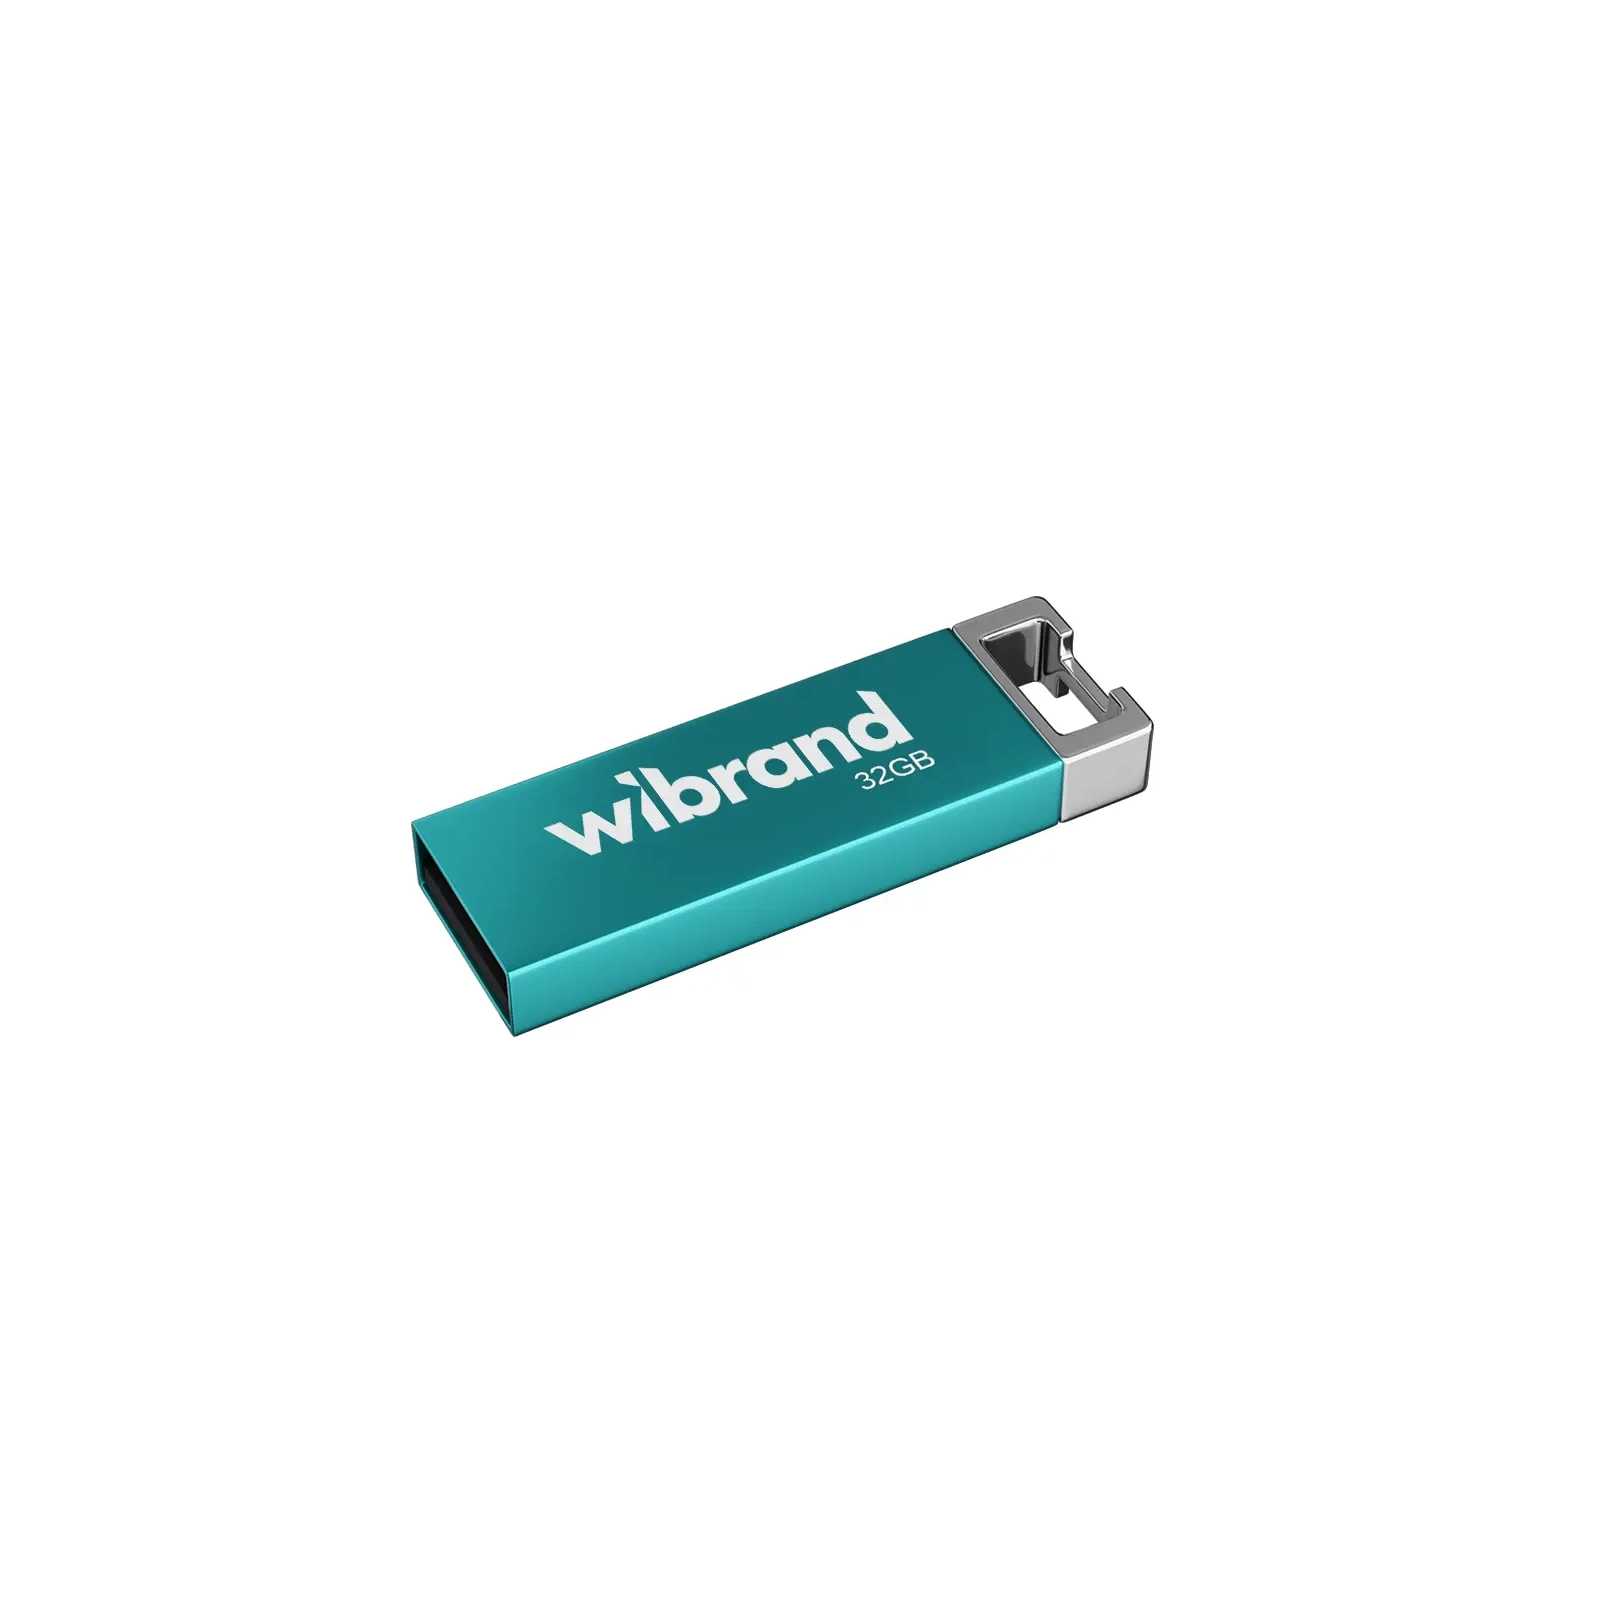 USB флеш накопитель Wibrand 8GB Chameleon Light Blue USB 2.0 (WI2.0/CH8U6LU)